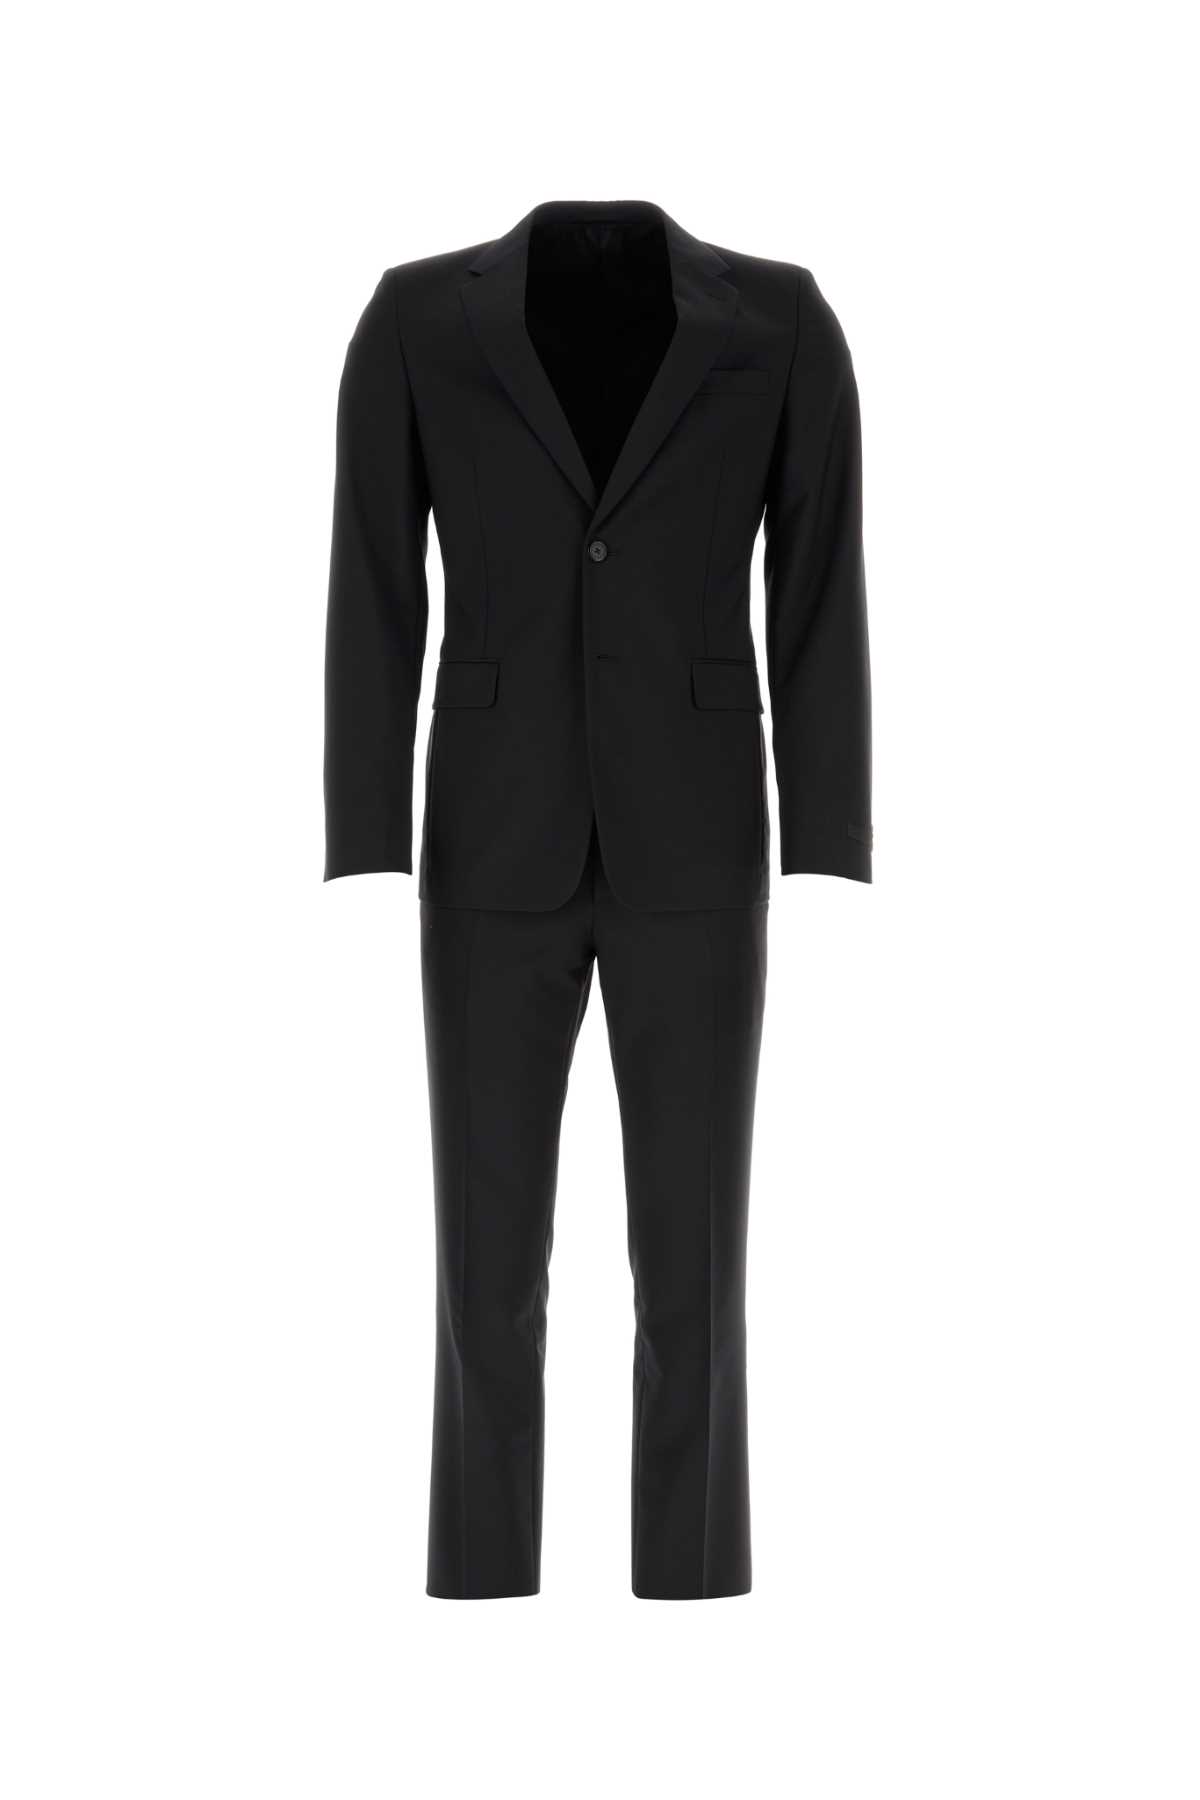 Prada Midnight Blue Wool Blend Suit In F0008